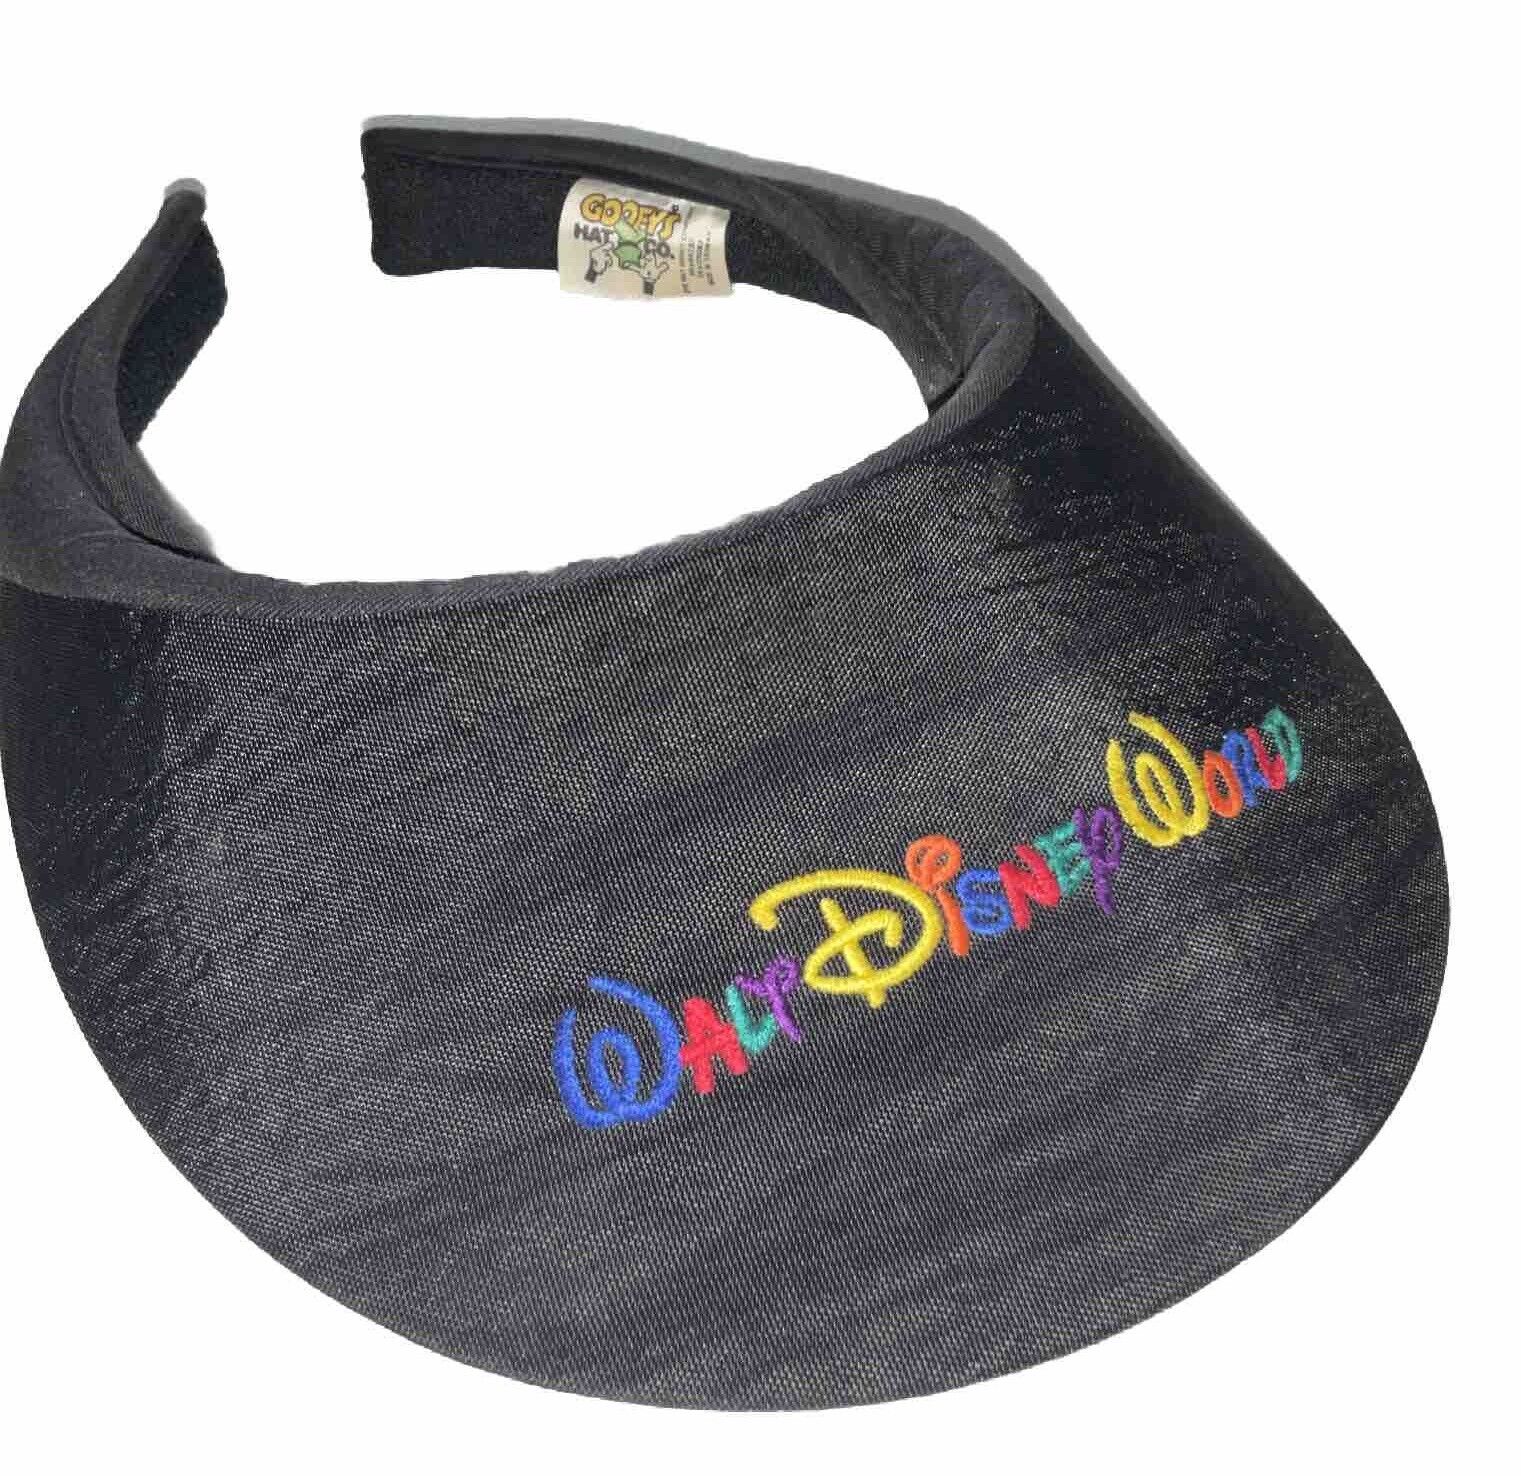 Vintage Walt Disney World Hat Visor Cap Embroidered Rainbow Black Goofys 90s